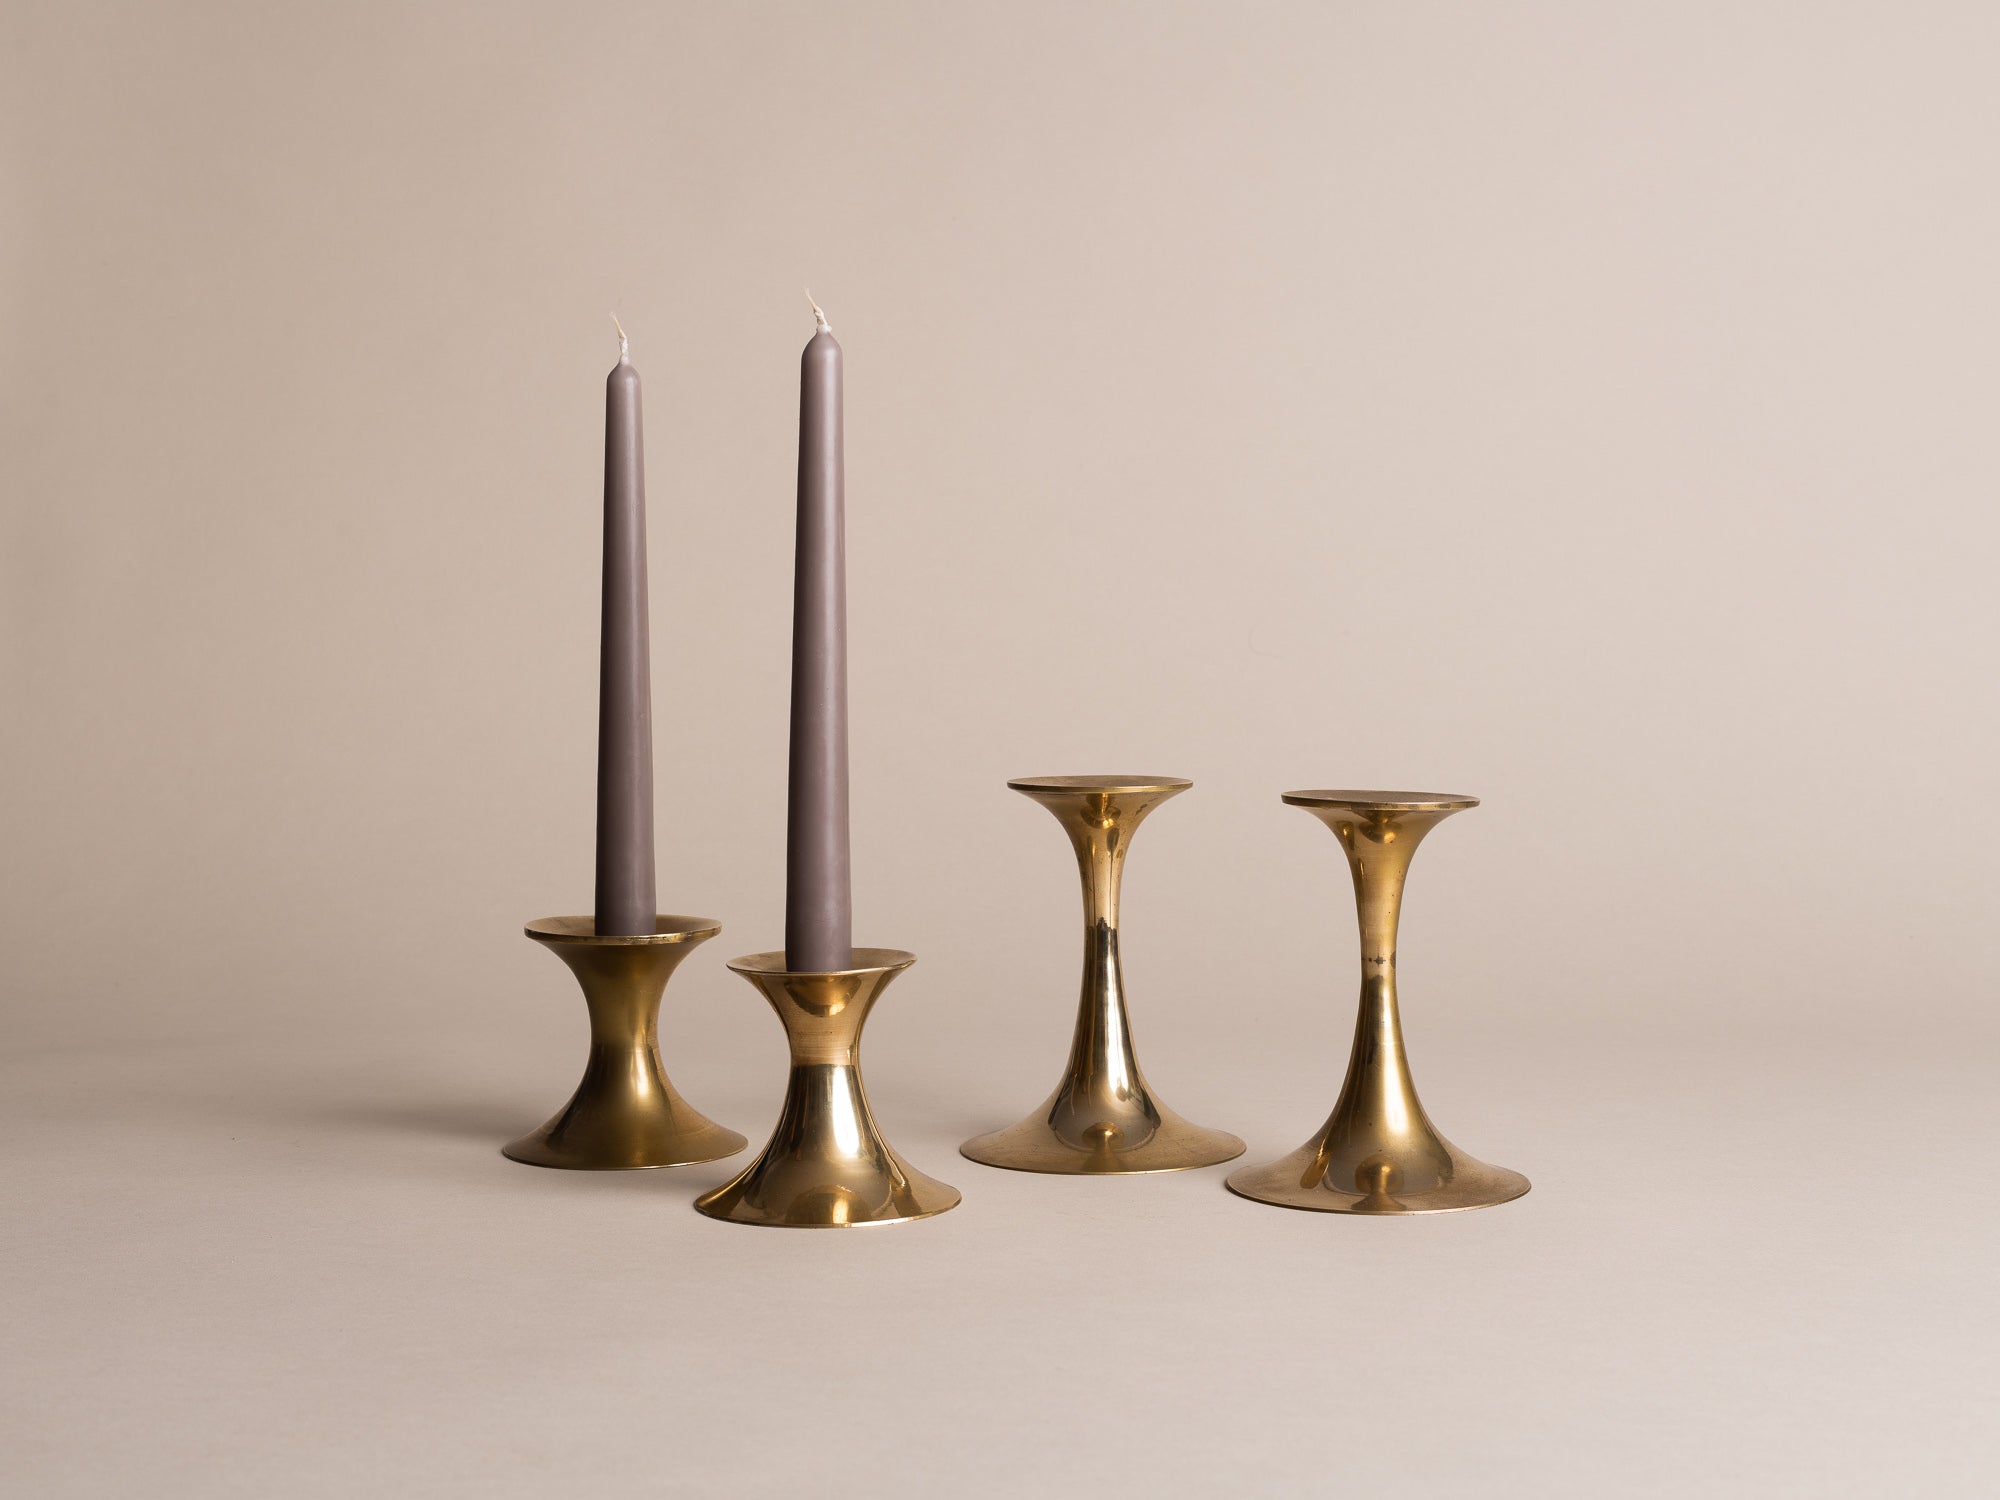 Suite de 4 flambeaux modernistes, Danemark (vers 1955)..Set of 4 "Diabolo" modernist Candle holders Denmark (circa 1955)